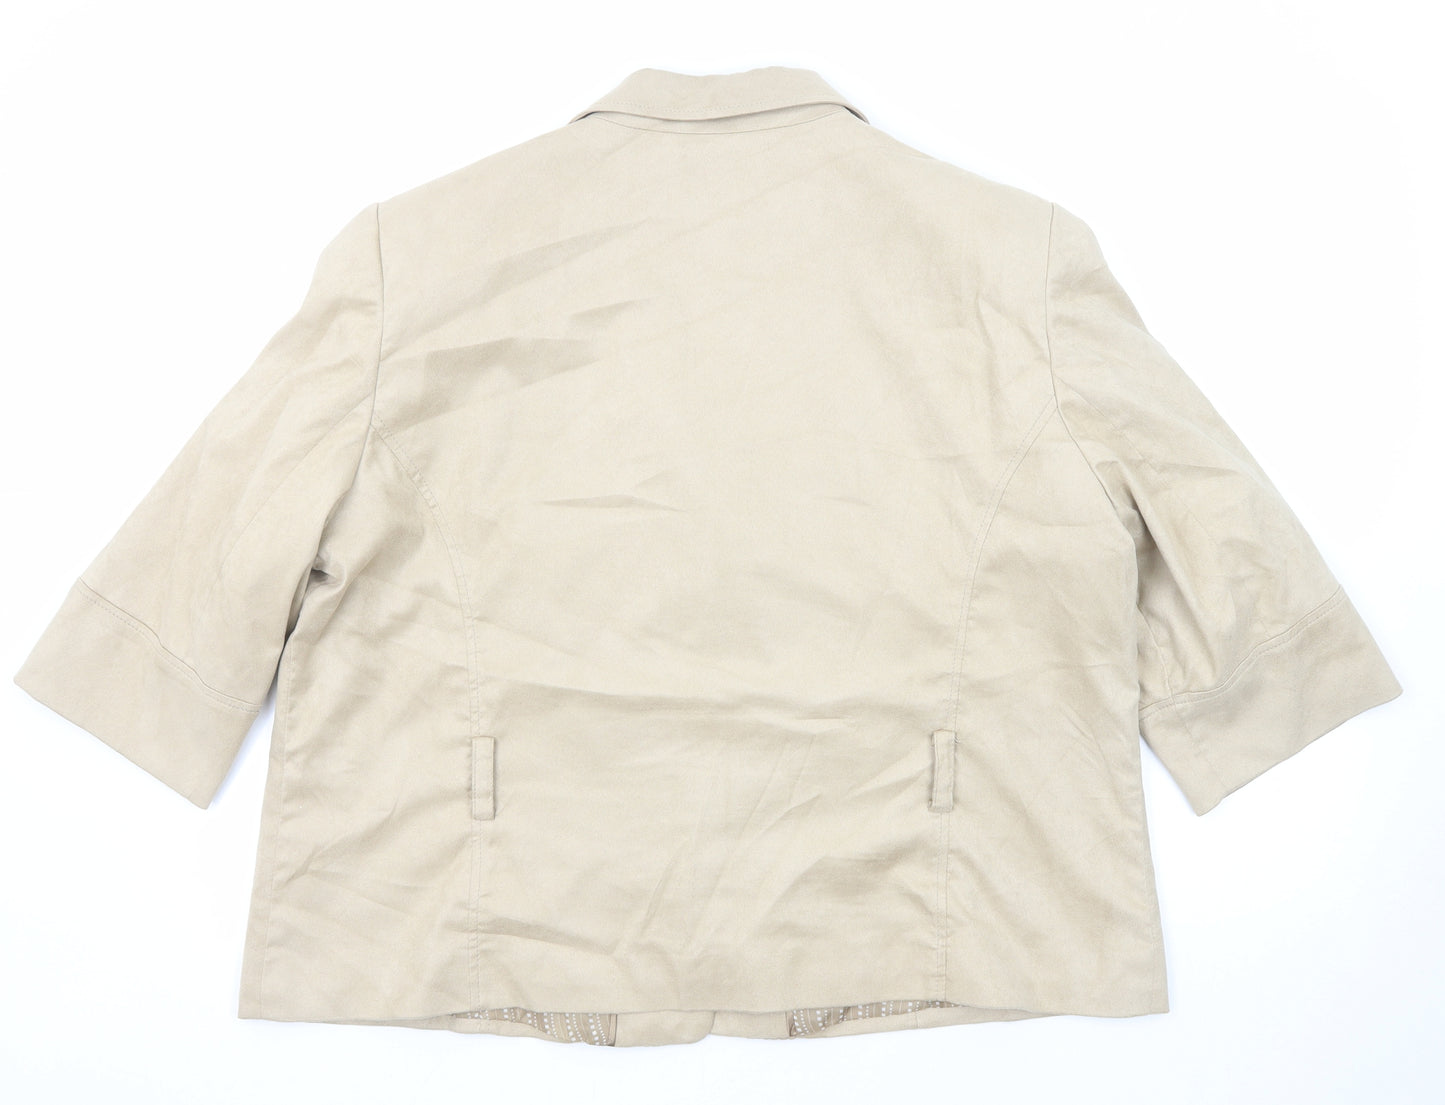 Klass Womens Beige Jacket Blazer Size 22 Button - Pleat Front Detail